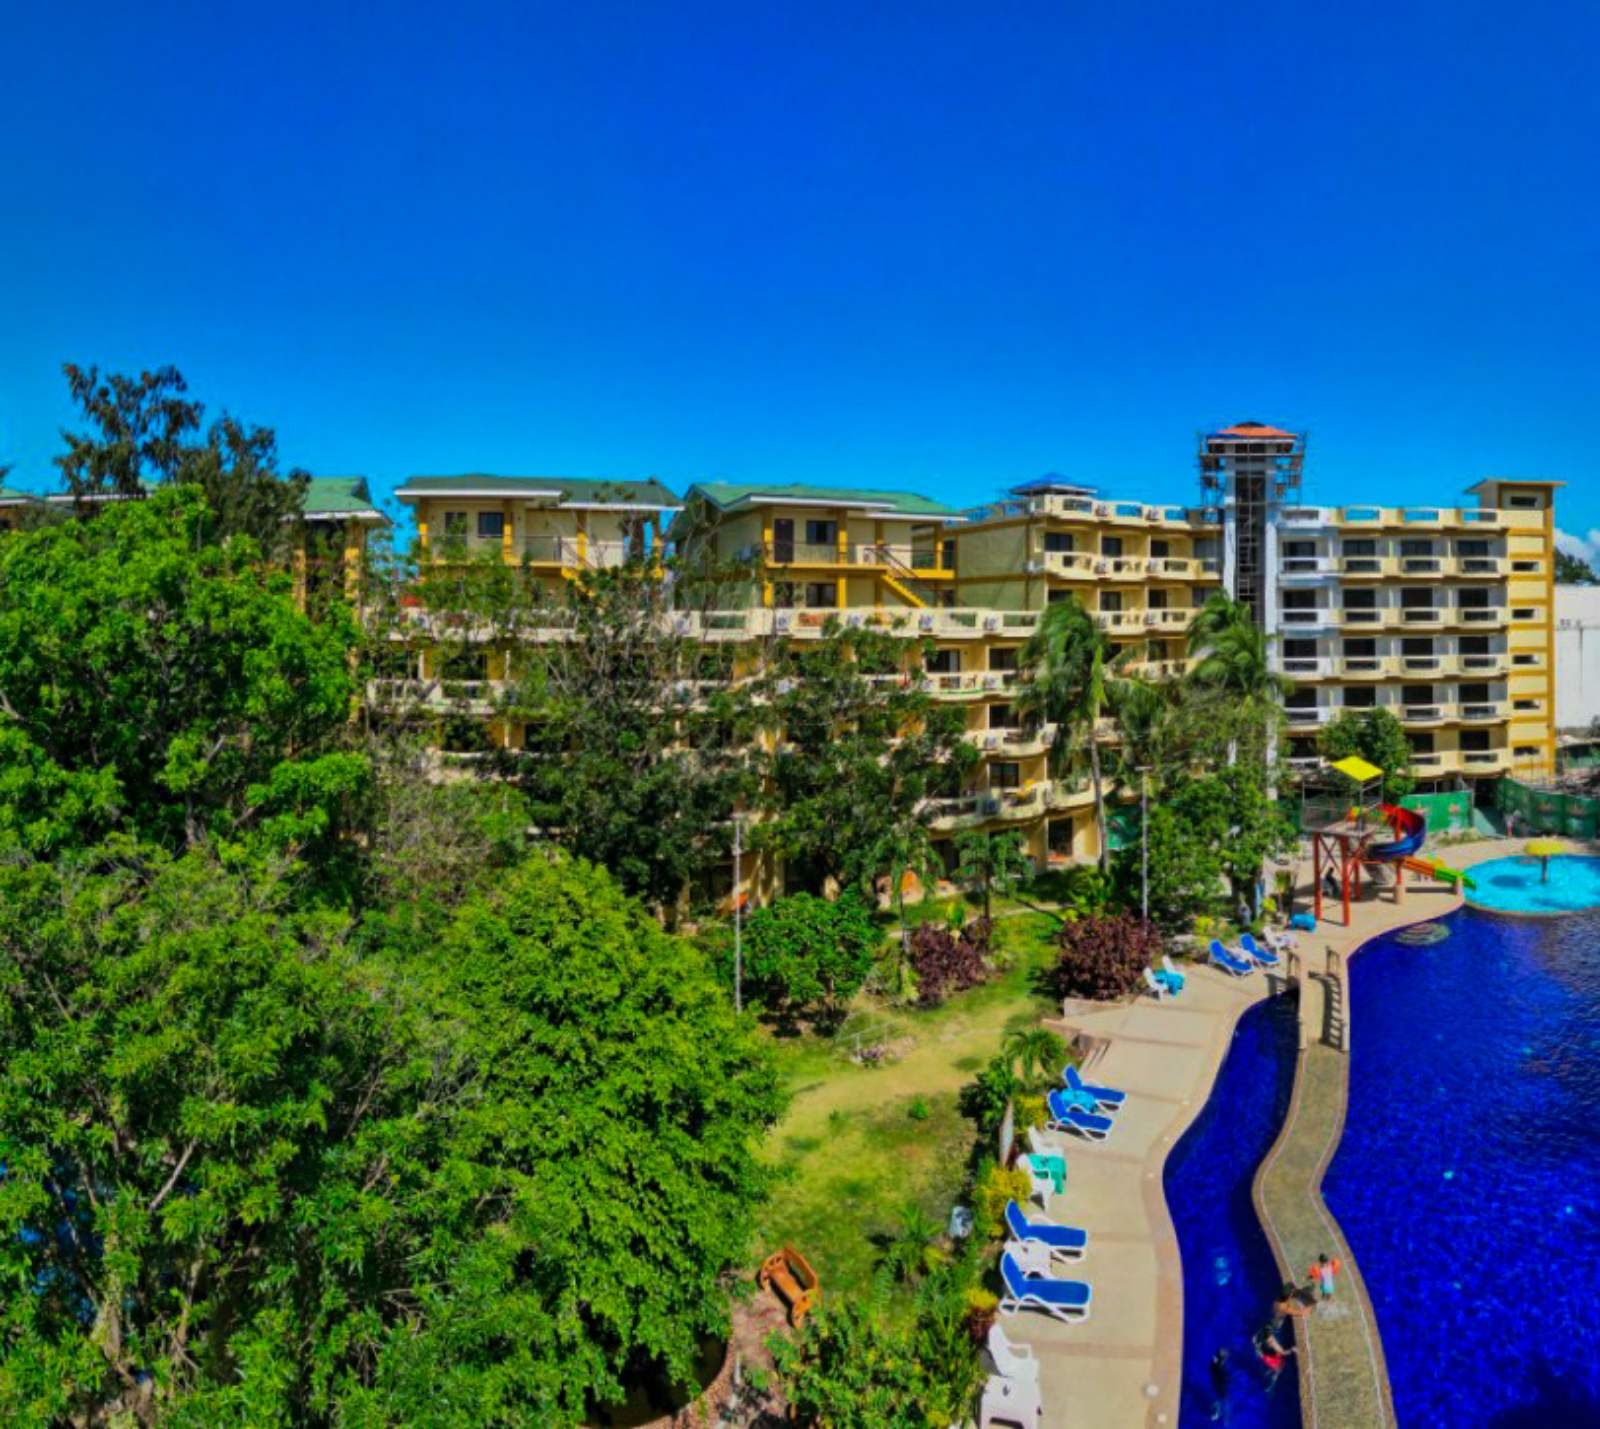 Rooms - Paradise Garden Resort Hotel & Convention Center Boracay